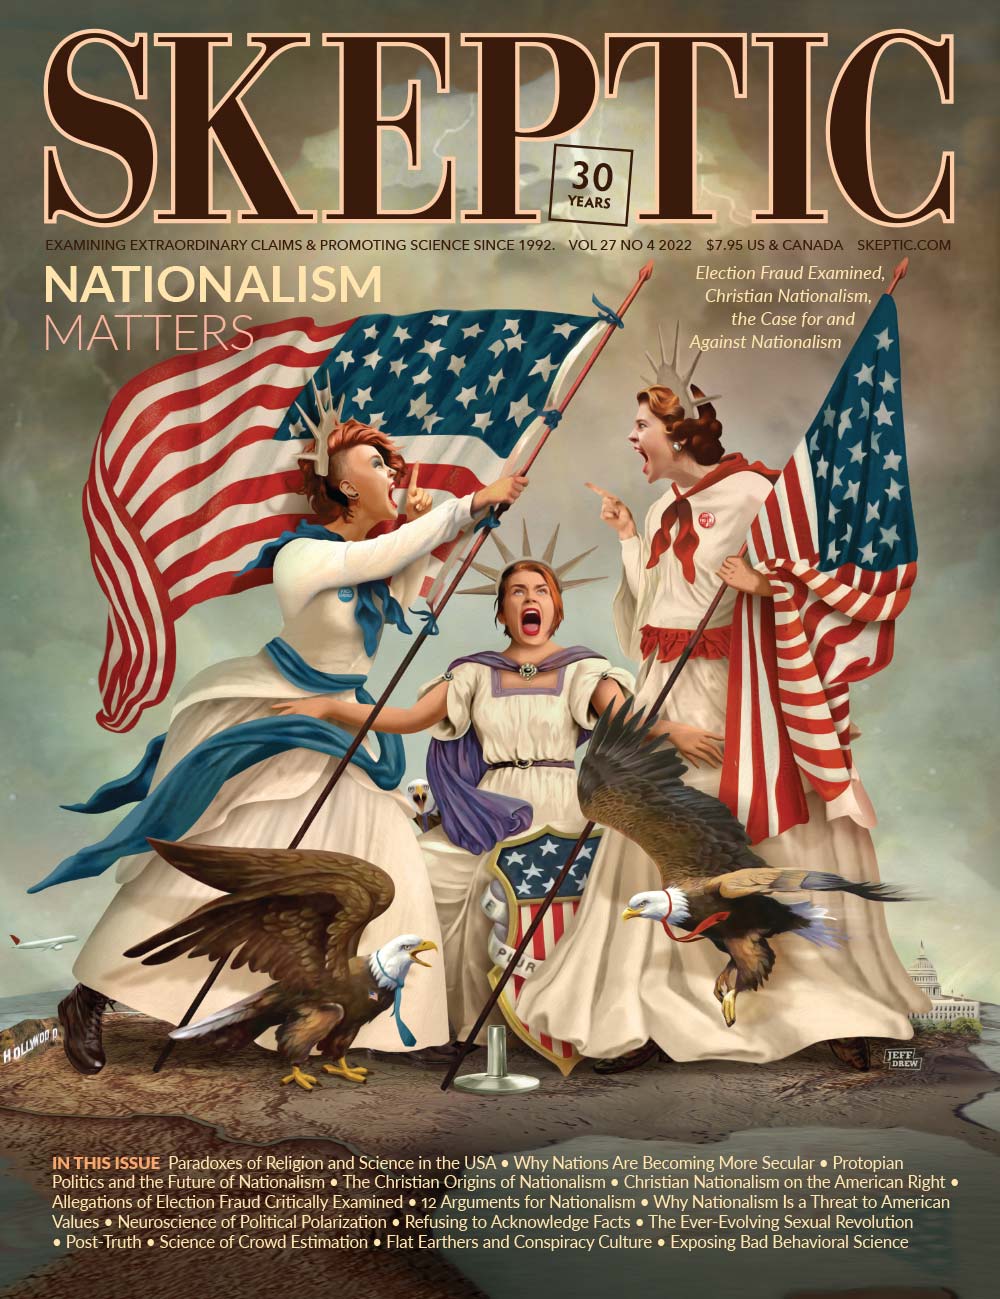 Nationalism Matters (Skeptic Magazine Vol. 27 No. 4)